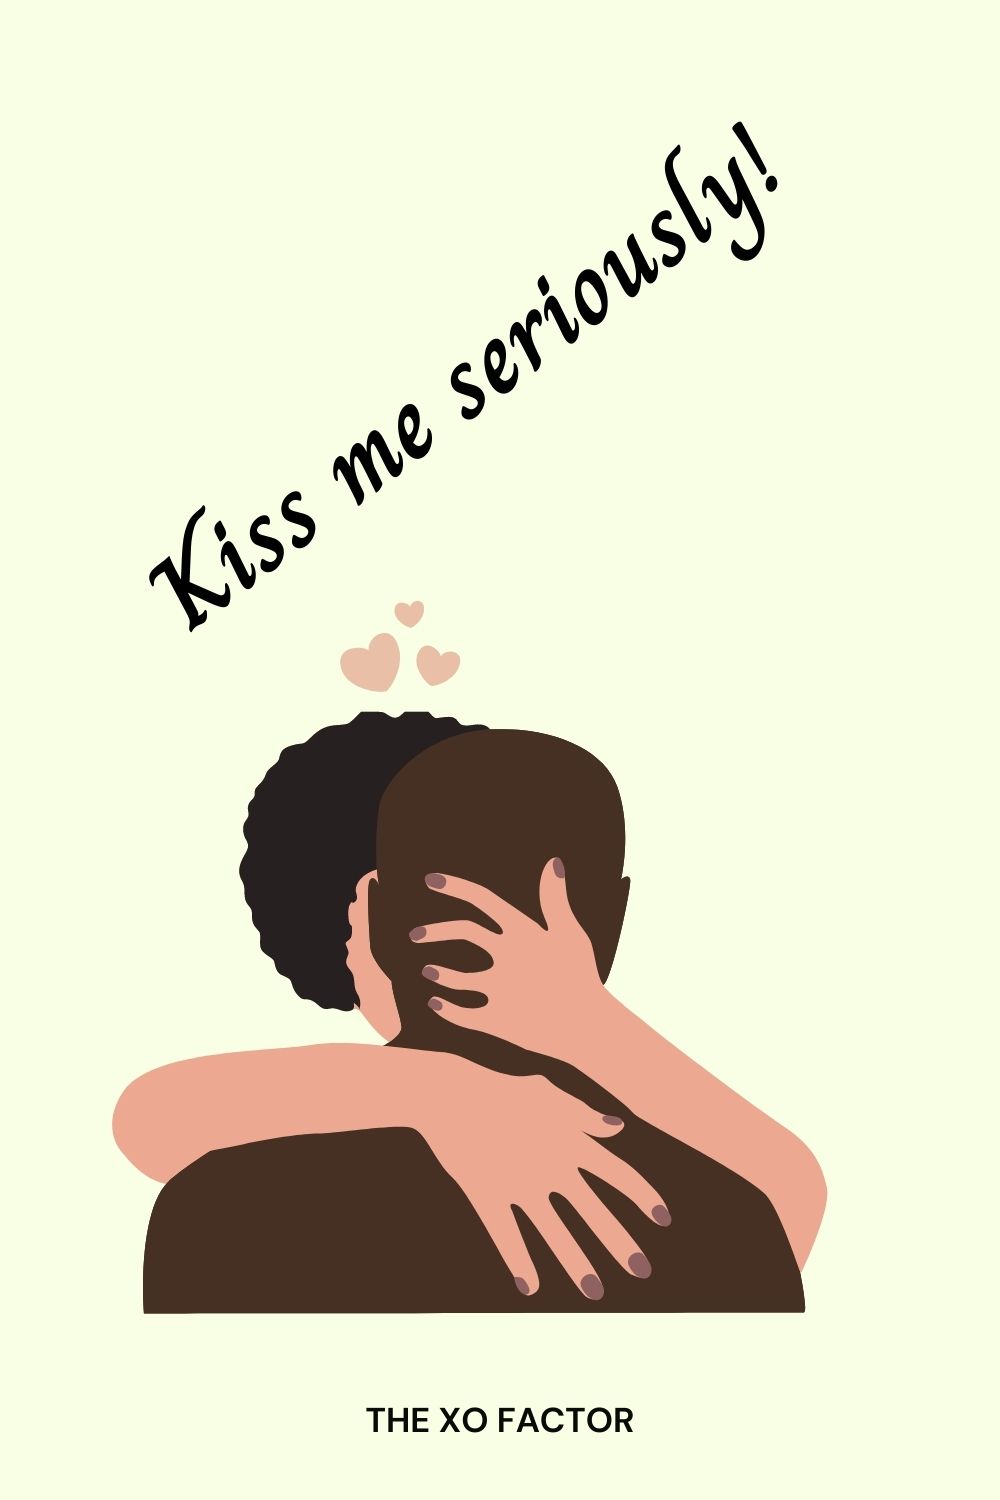 Kiss me seriously!